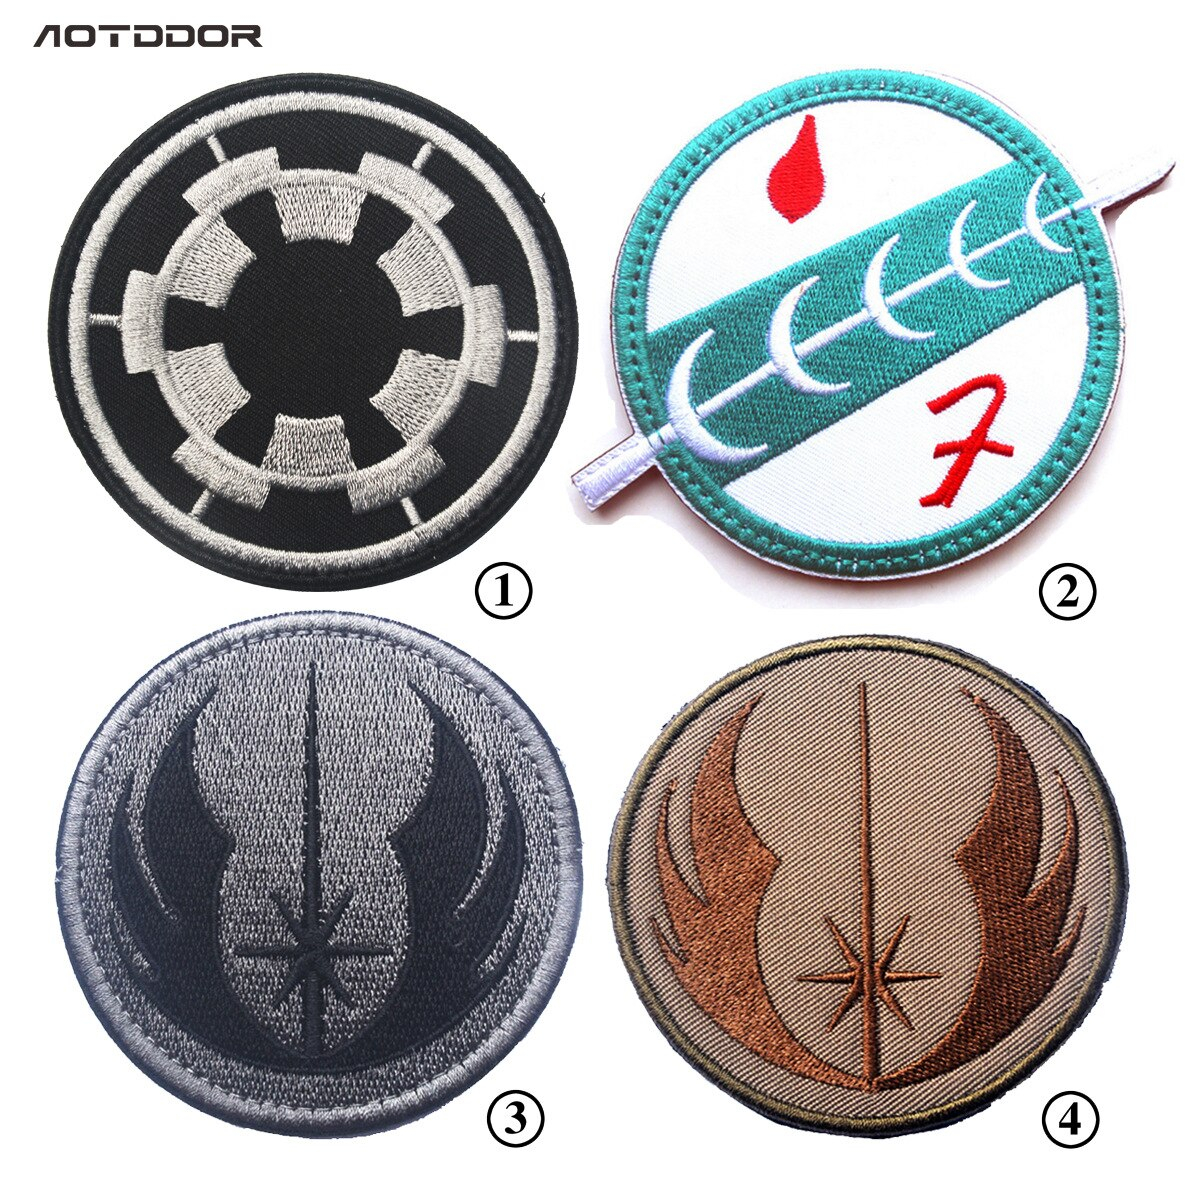 Star Wars Embroidery Pattern Embroidery Armband Star Wars Jedi Order Mandalorian Wave Bounty Hunter Boba Fett Emblem Patches